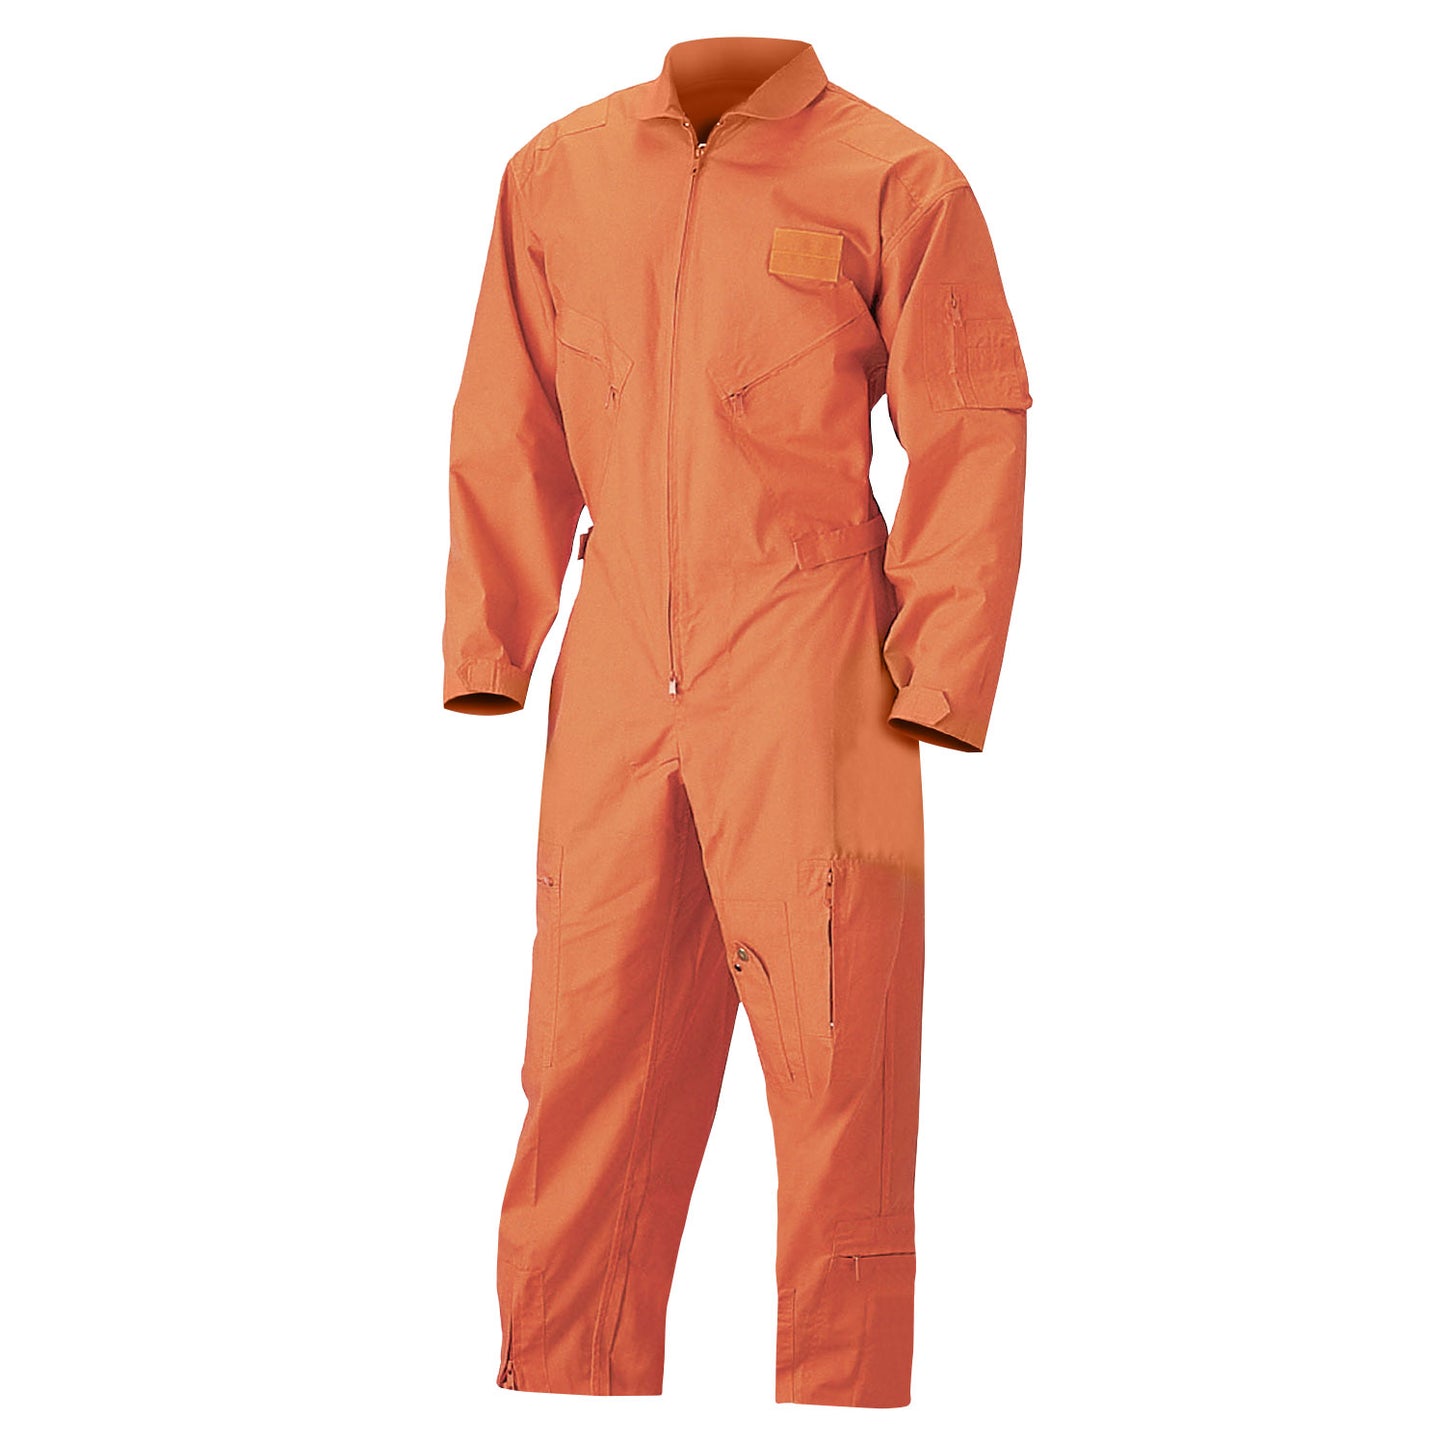 Rothco Flightsuits - Orange